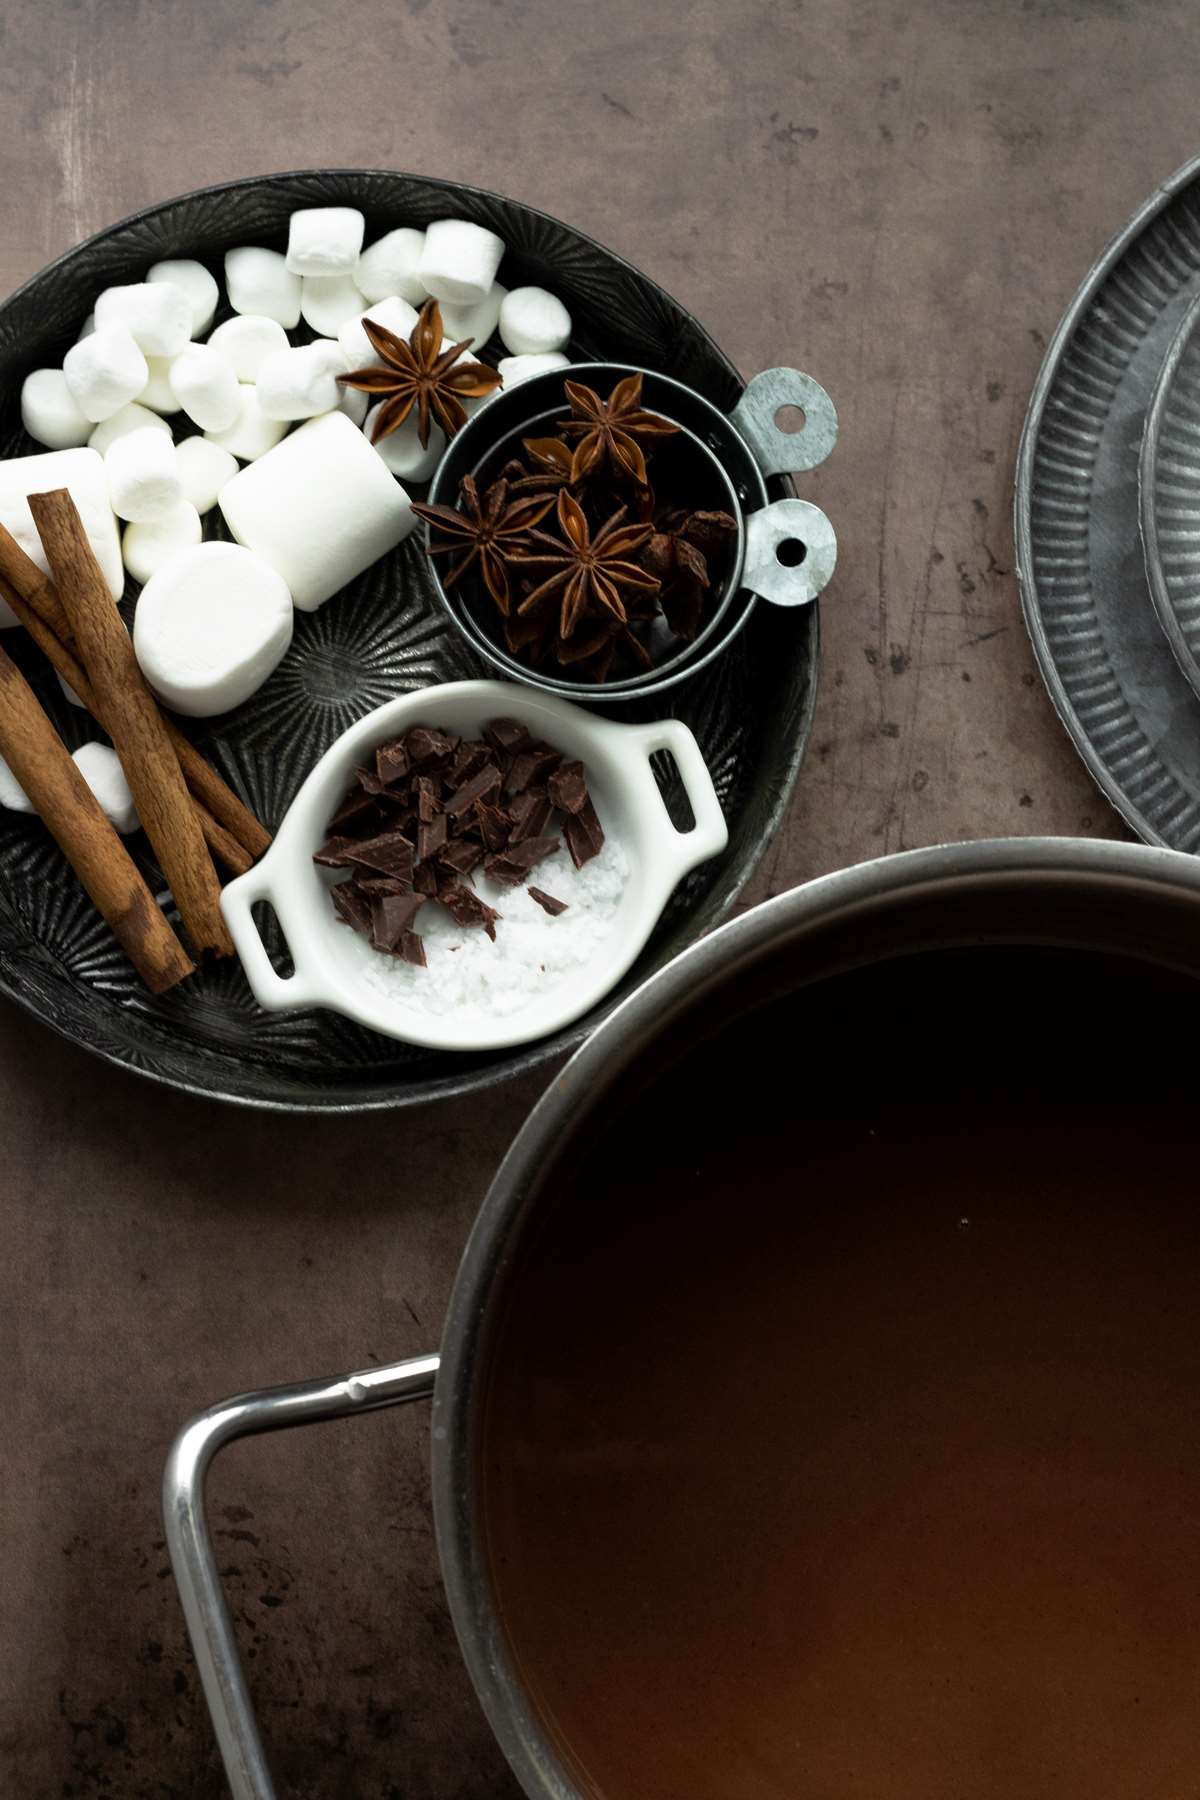 Hot chocolate preparation.